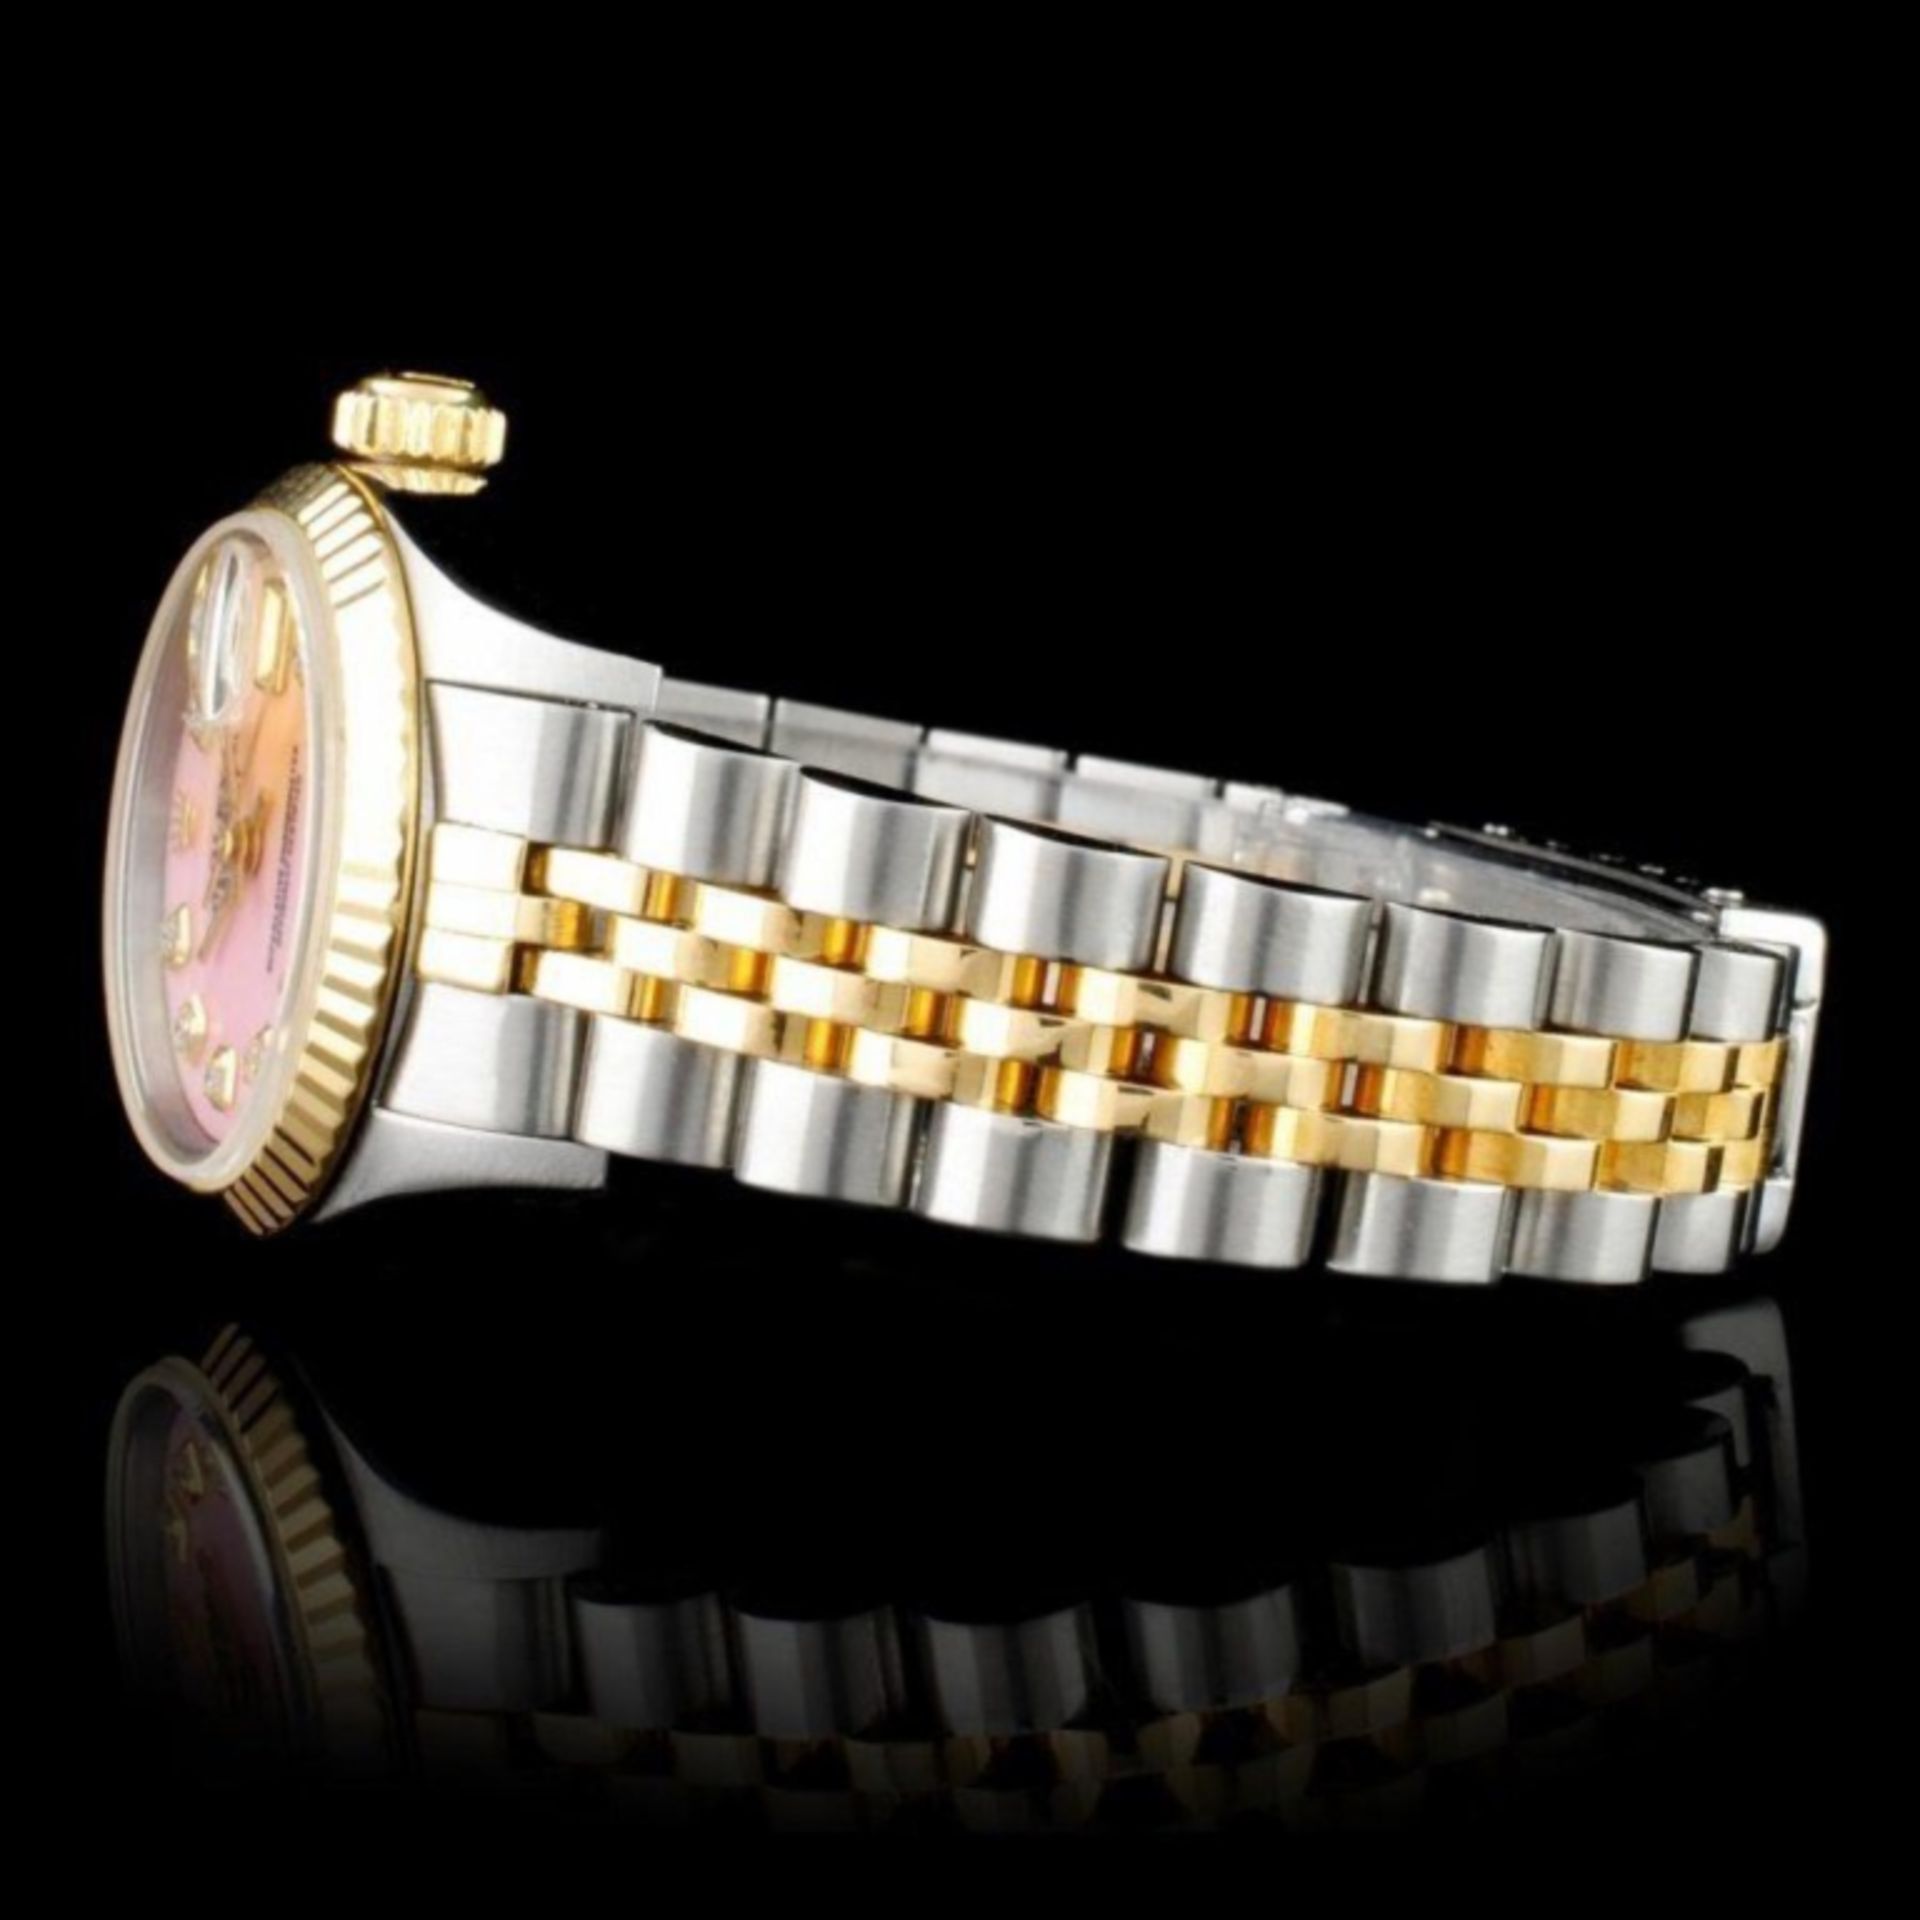 Rolex 18K & SS DateJust Diamond Ladies Watch - Image 7 of 8